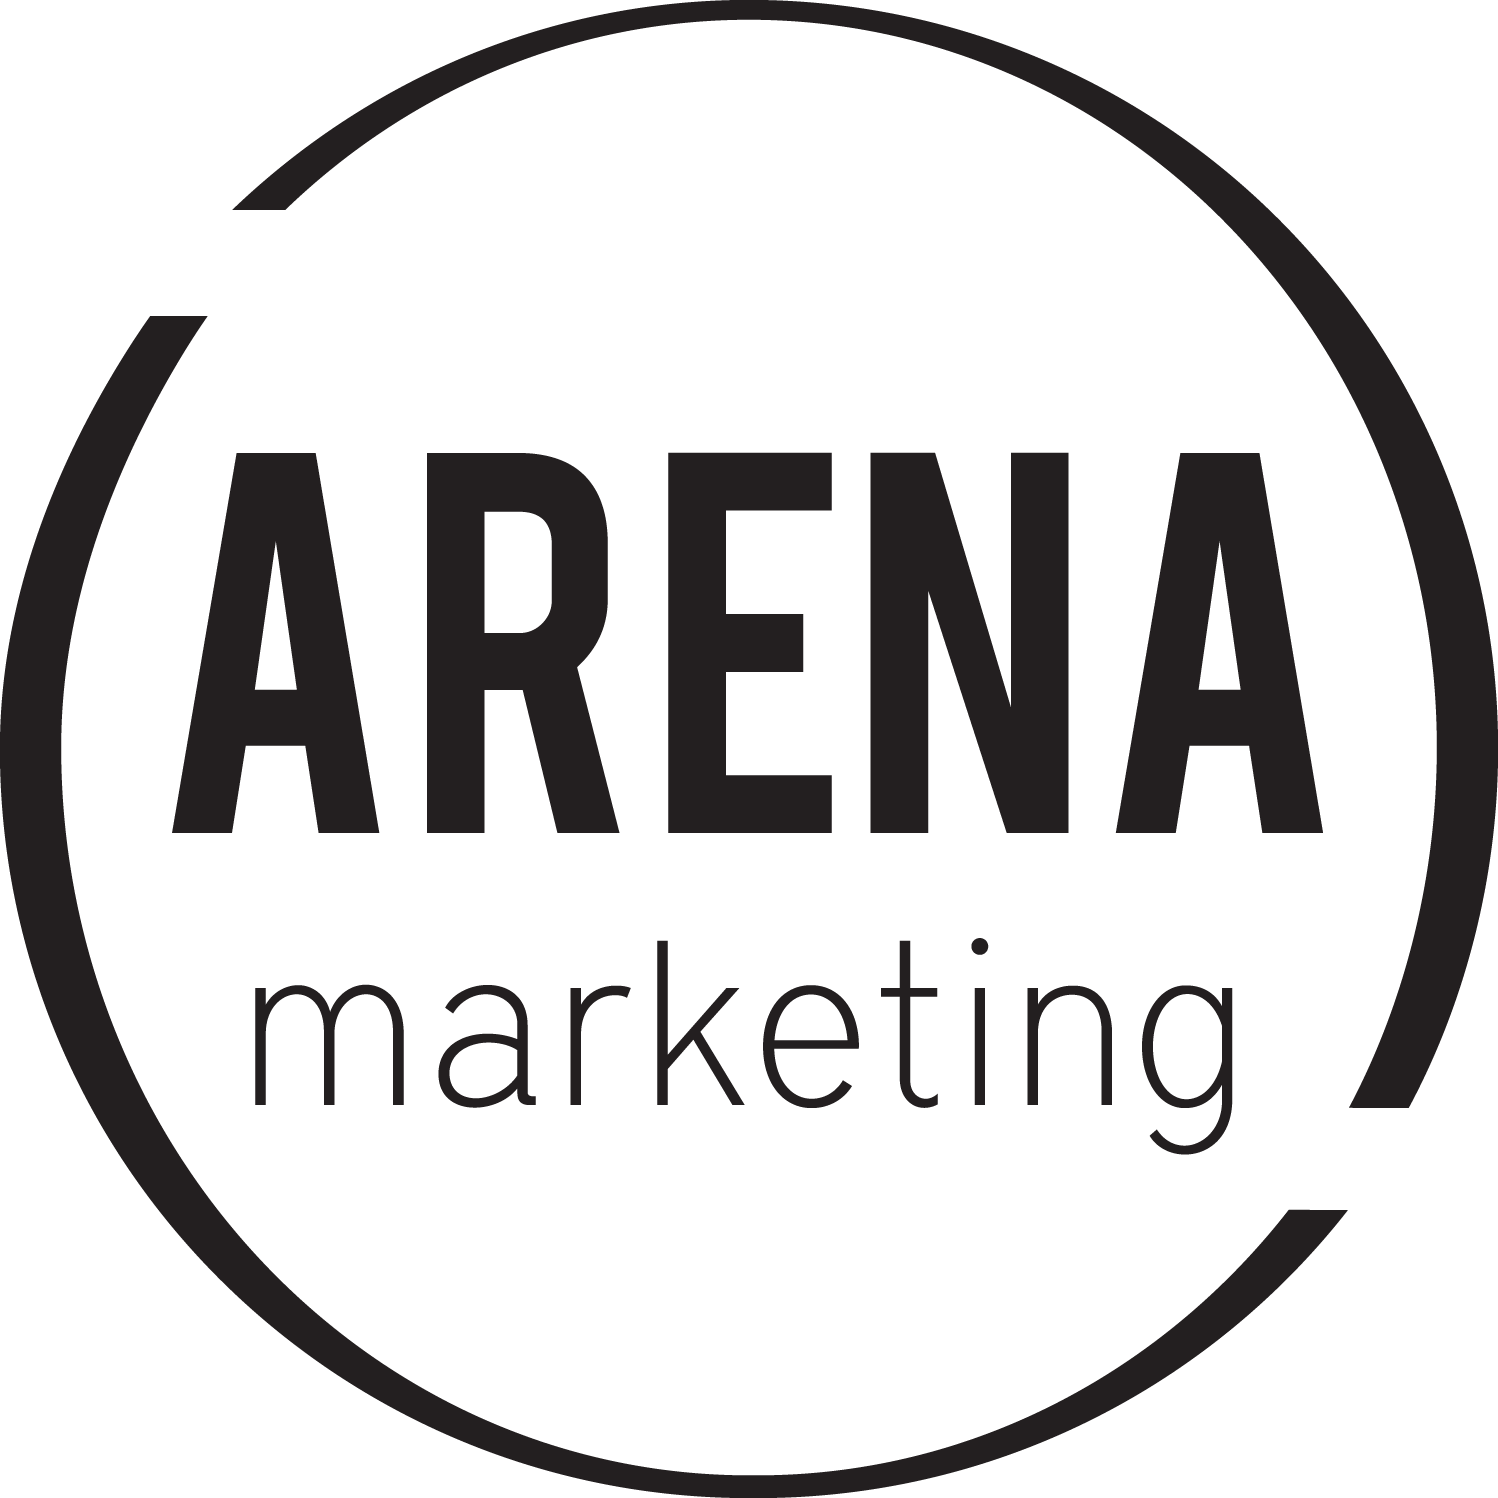 ARENA Marketing